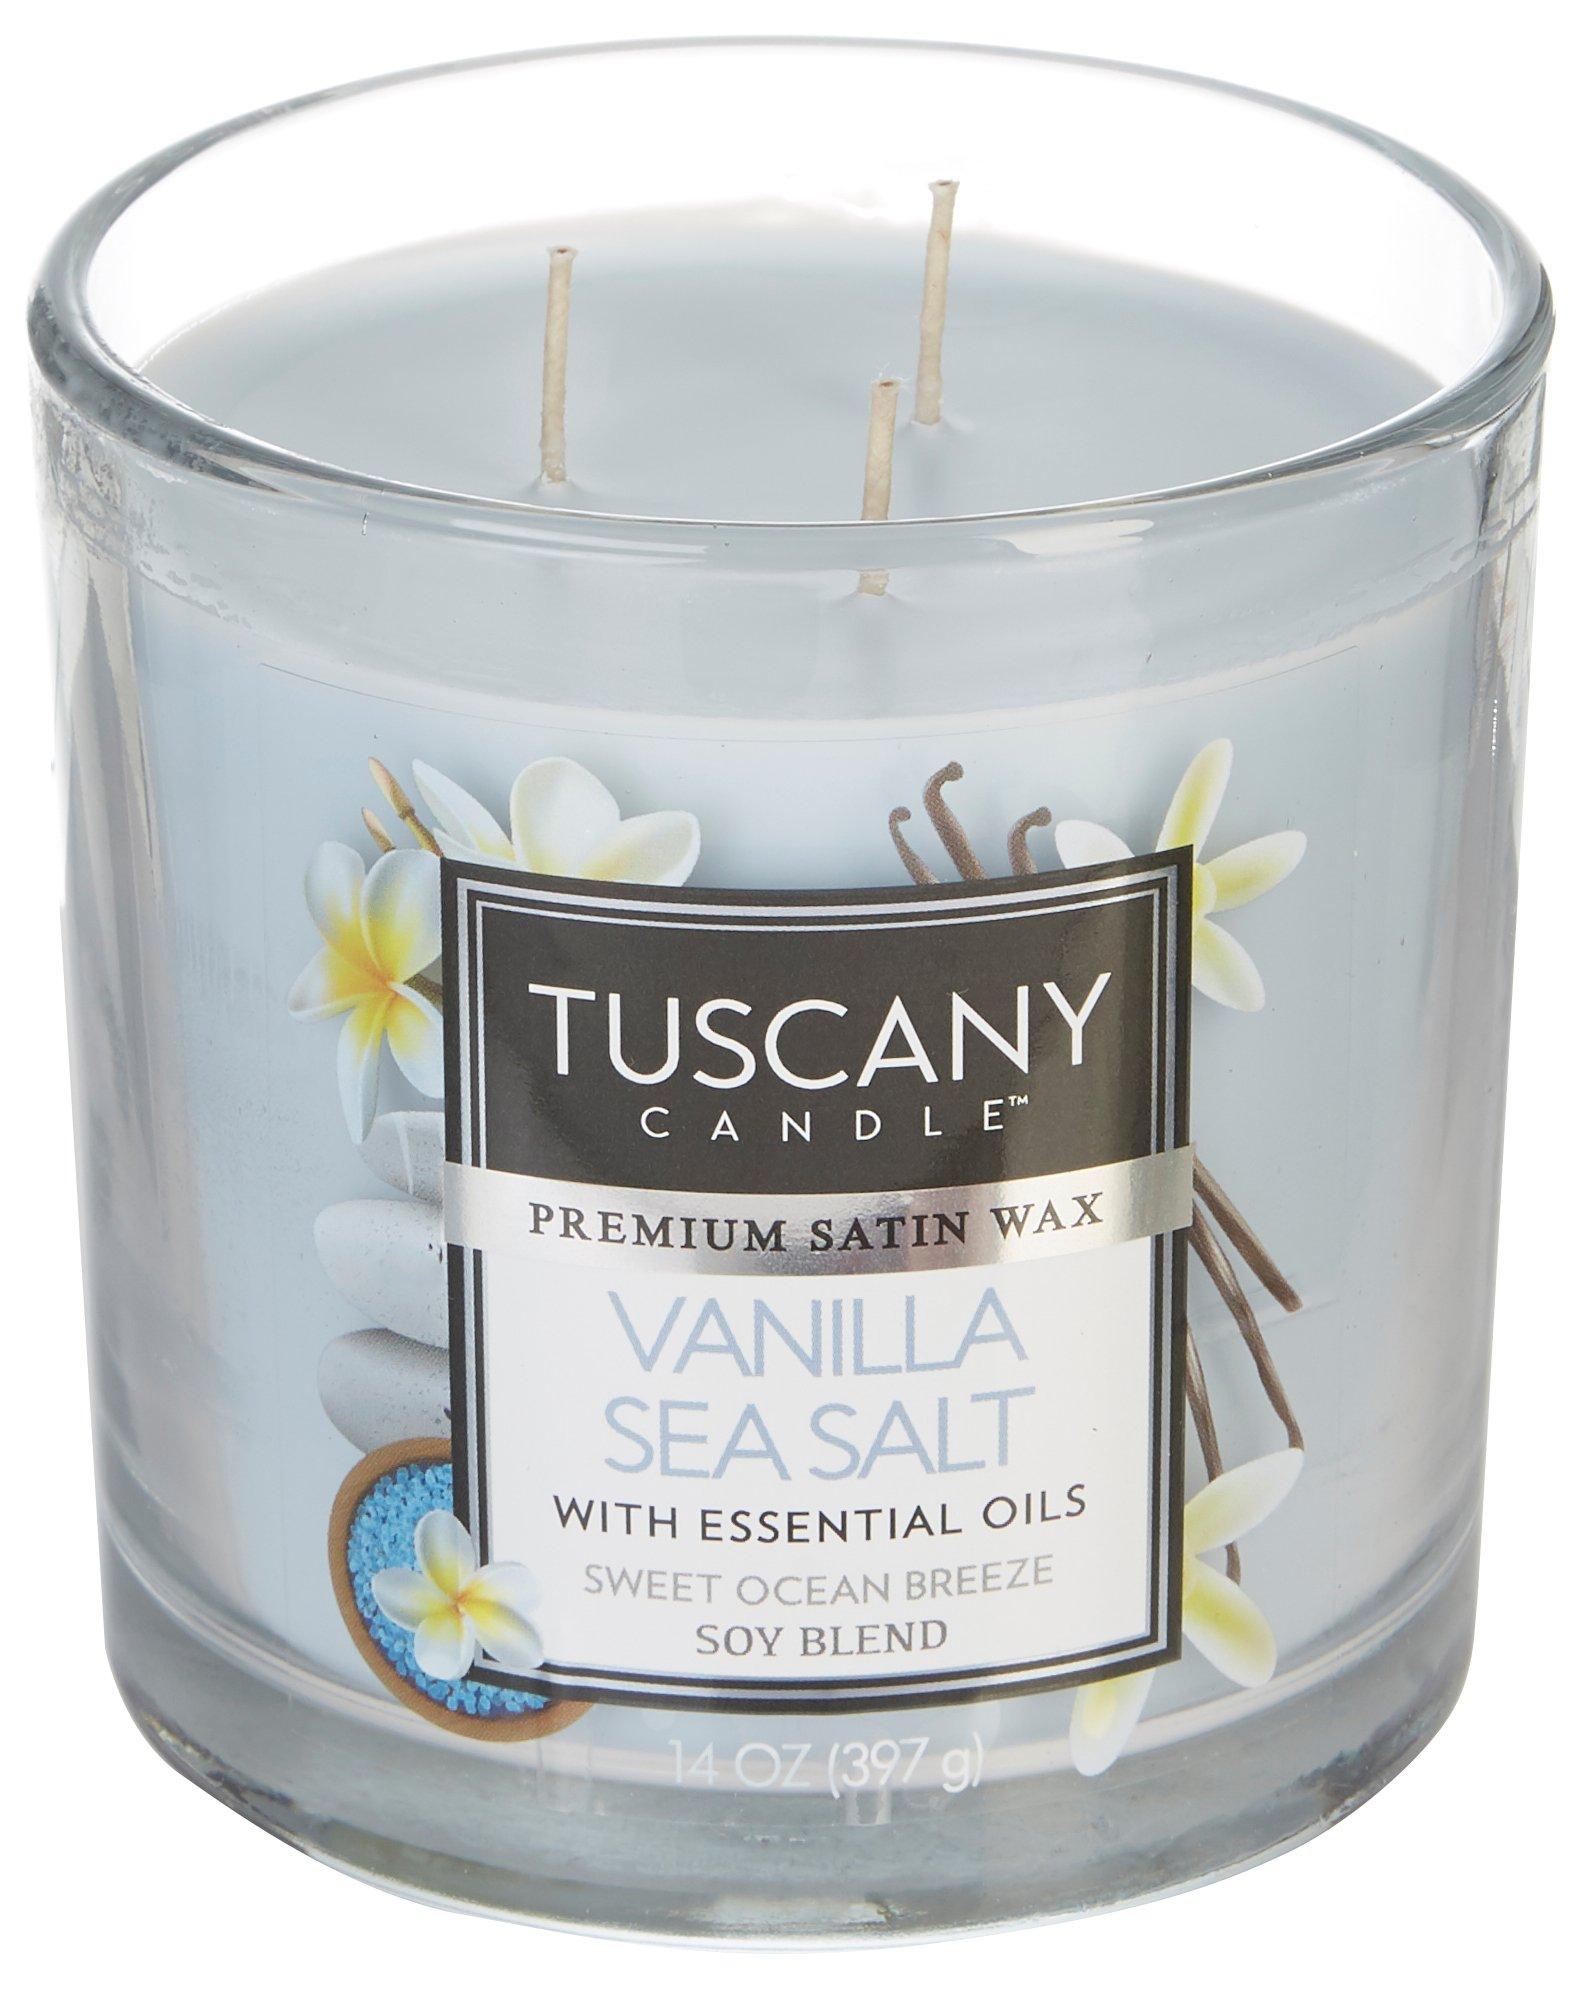 Tuscany 14 oz. Vanilla Sea Salt Soy Blend Jar Candle